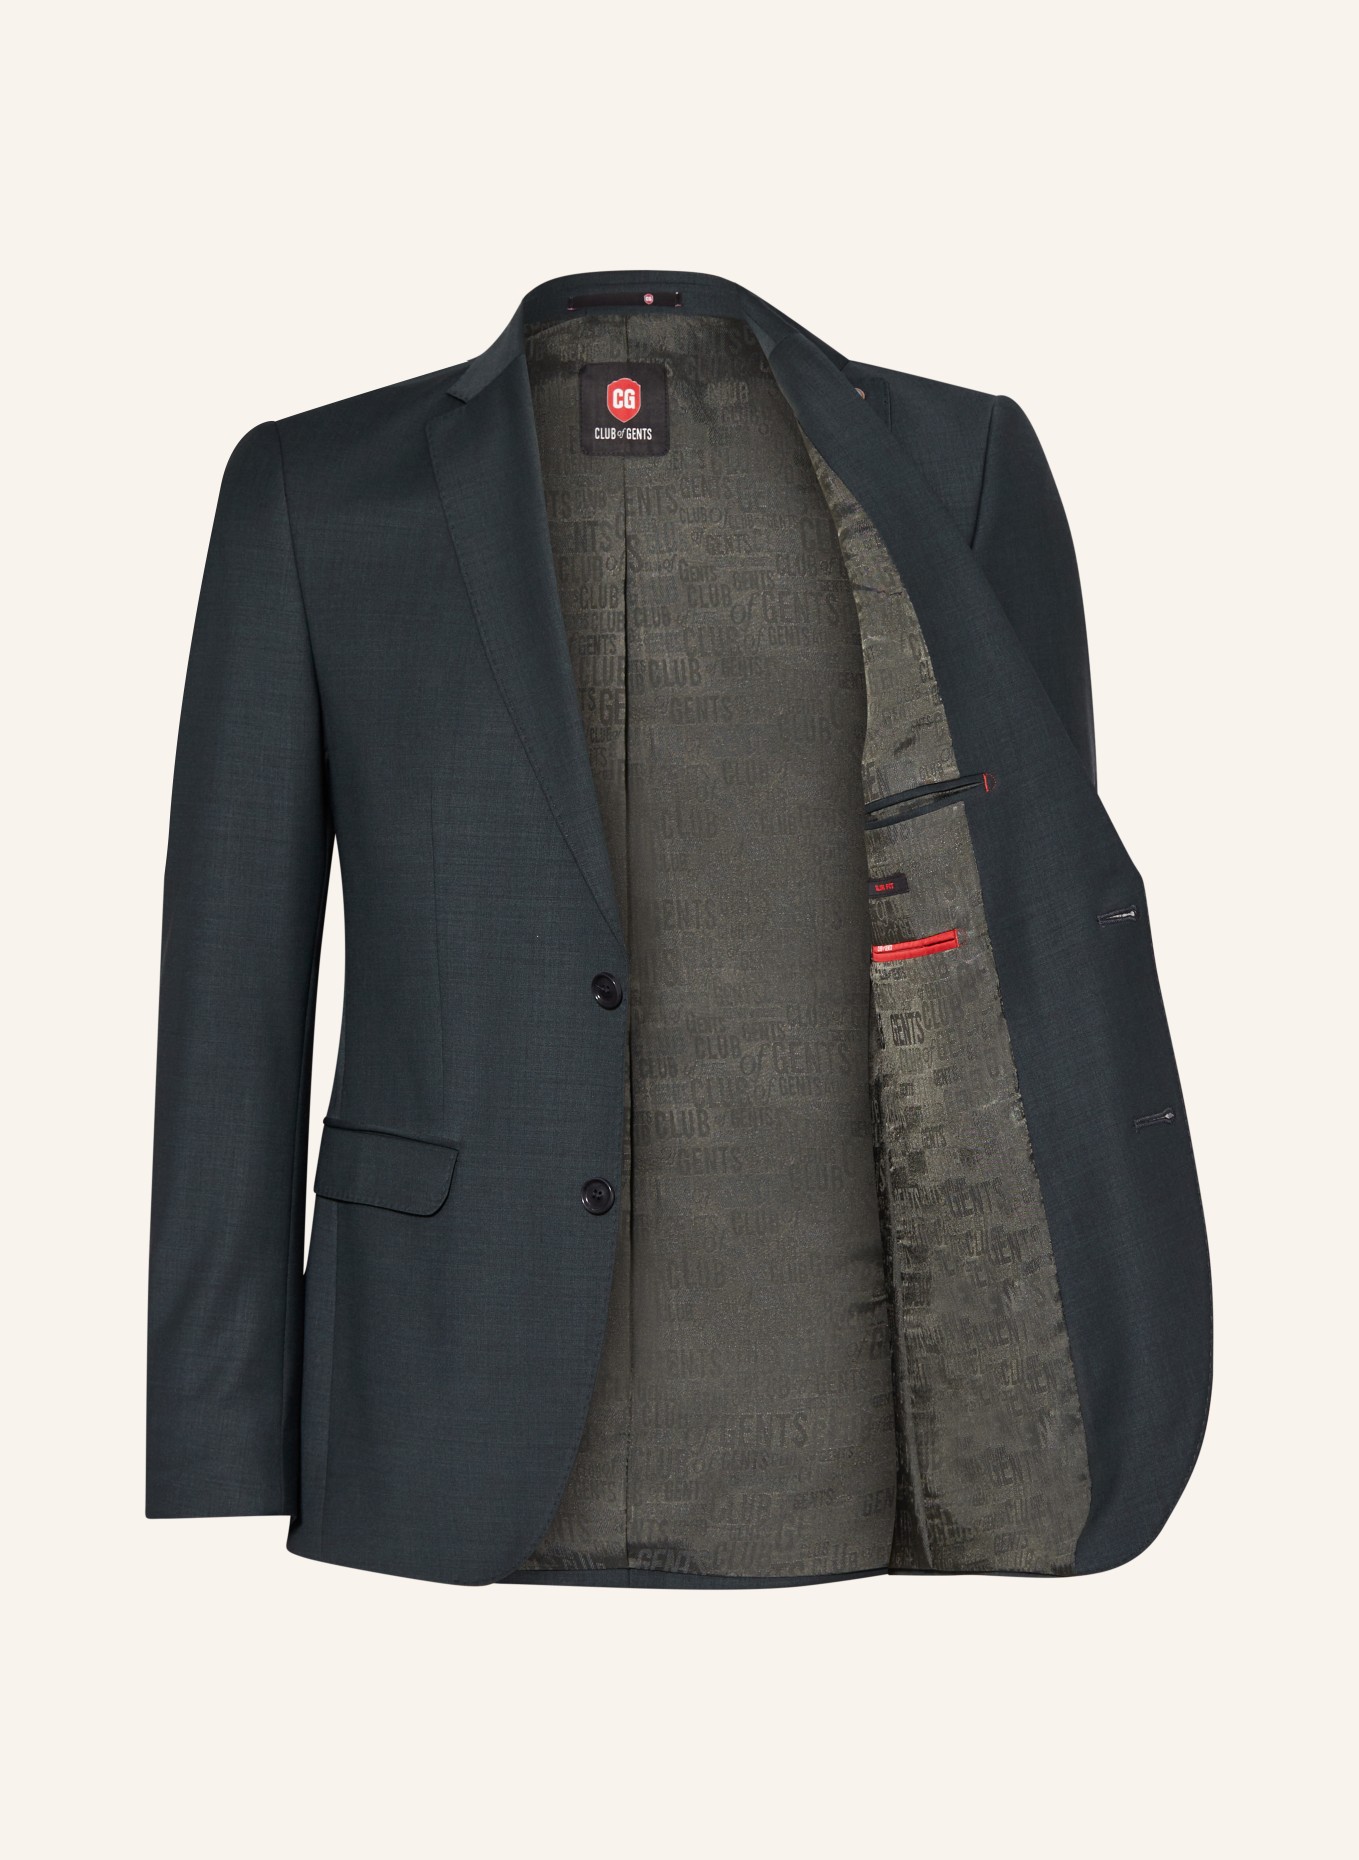 CG - CLUB of GENTS Suit jacket COLVIN slim fit, Color: 53 gruen dunkel (Image 4)